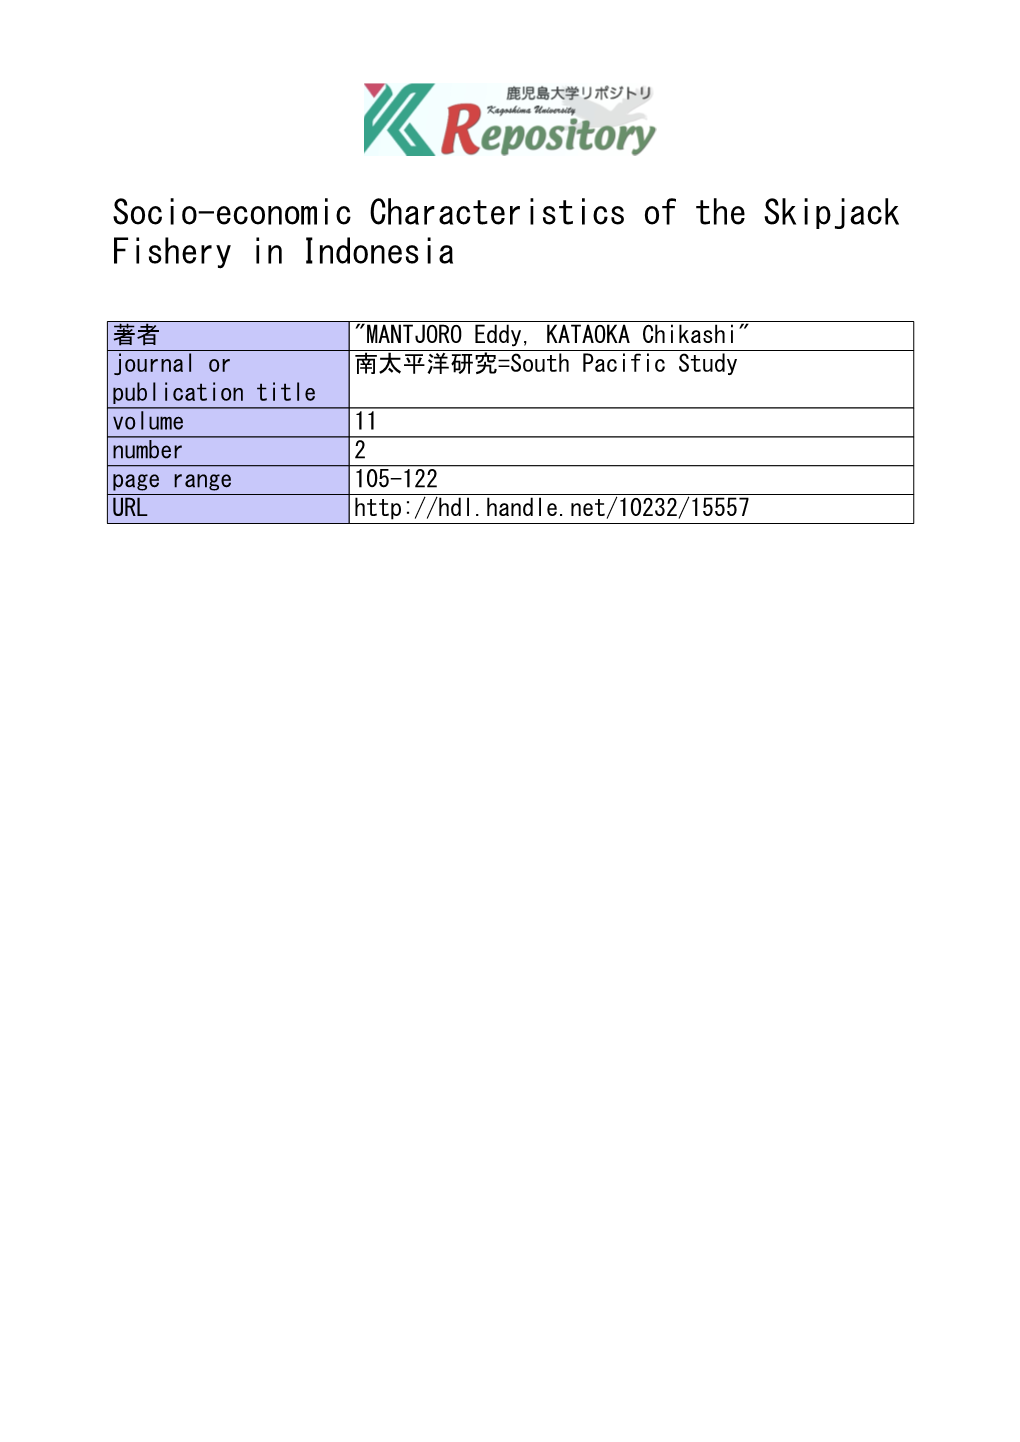 Socio-Economic Characteristics of the Skipjack Fishery in Indonesia